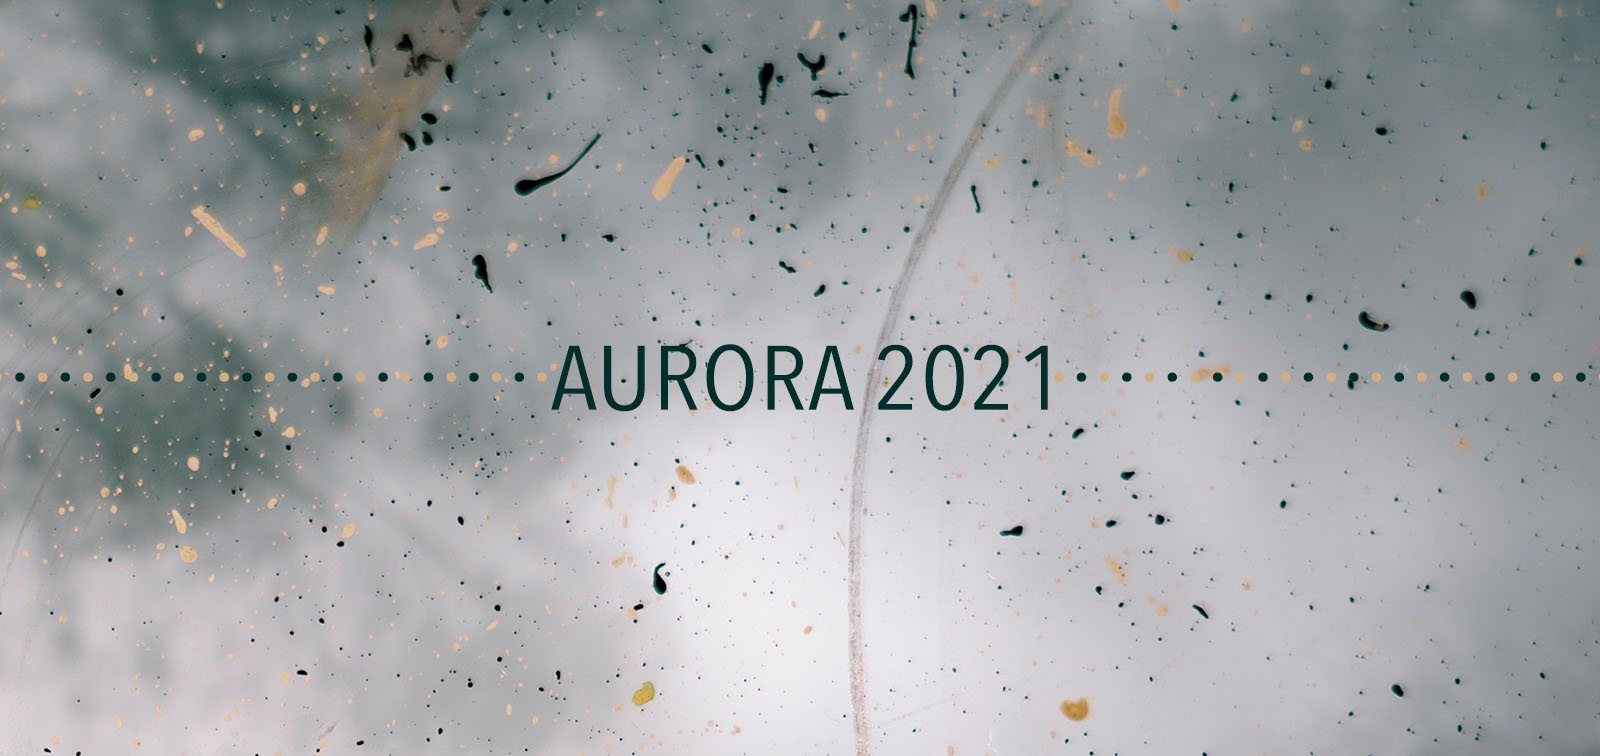 AURORA 2021 project